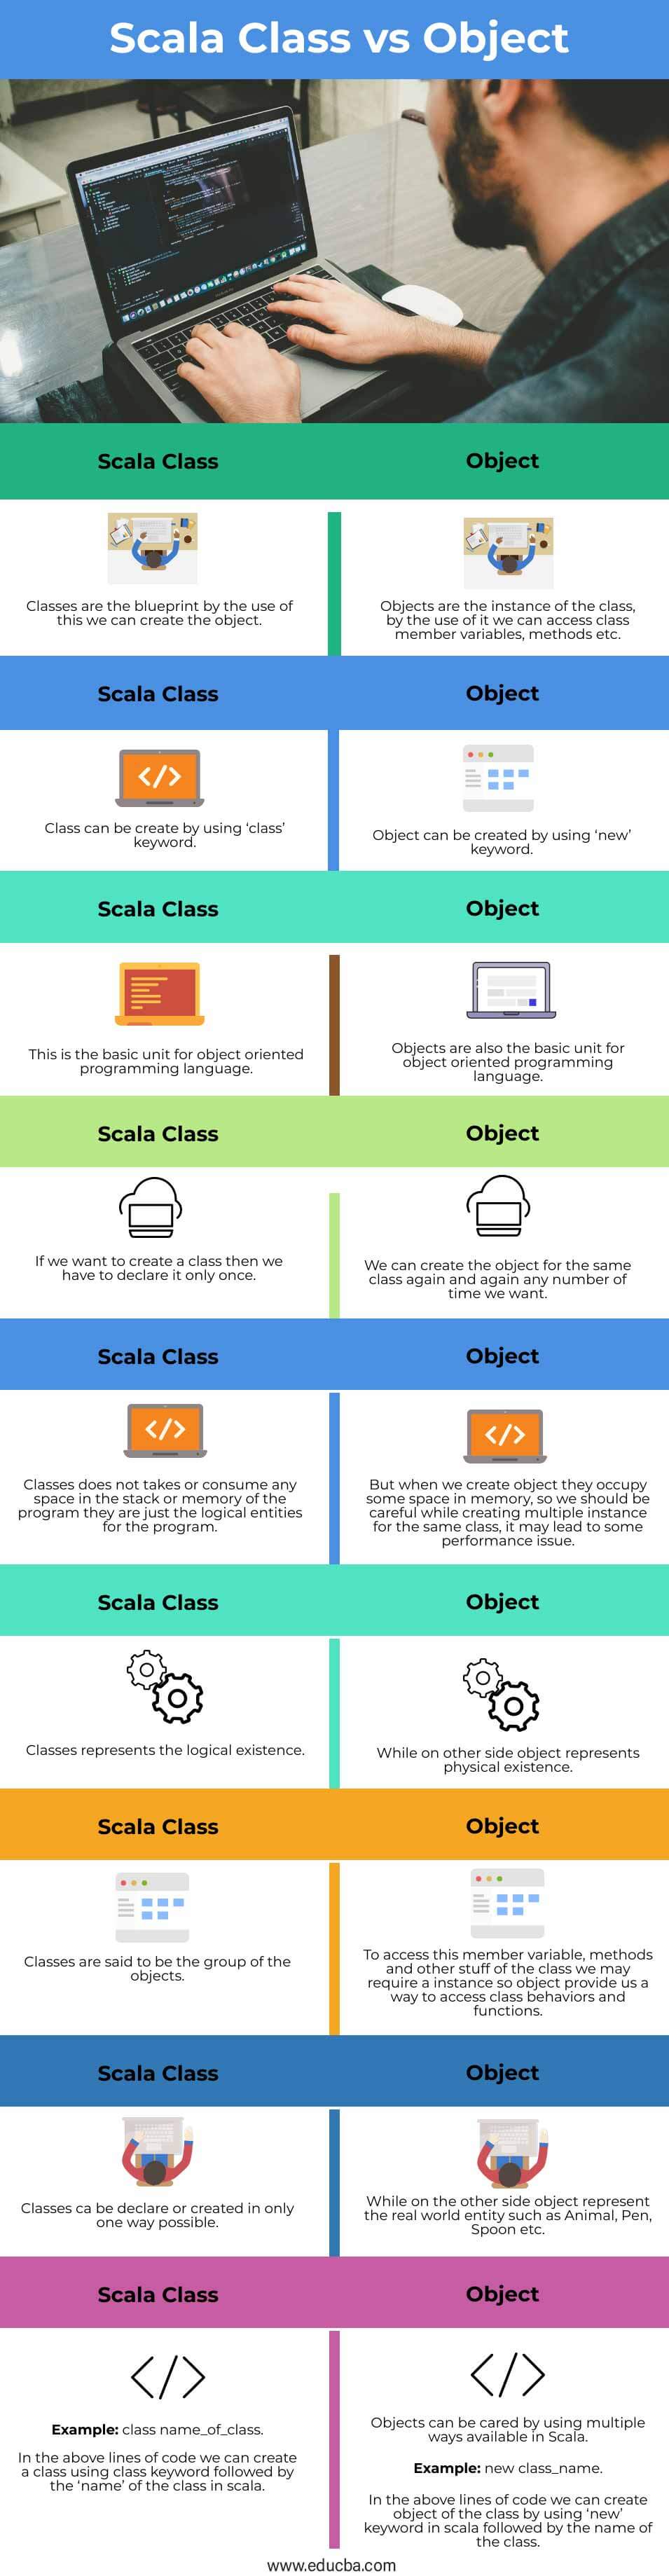 Scala-Class-vs-Object-info